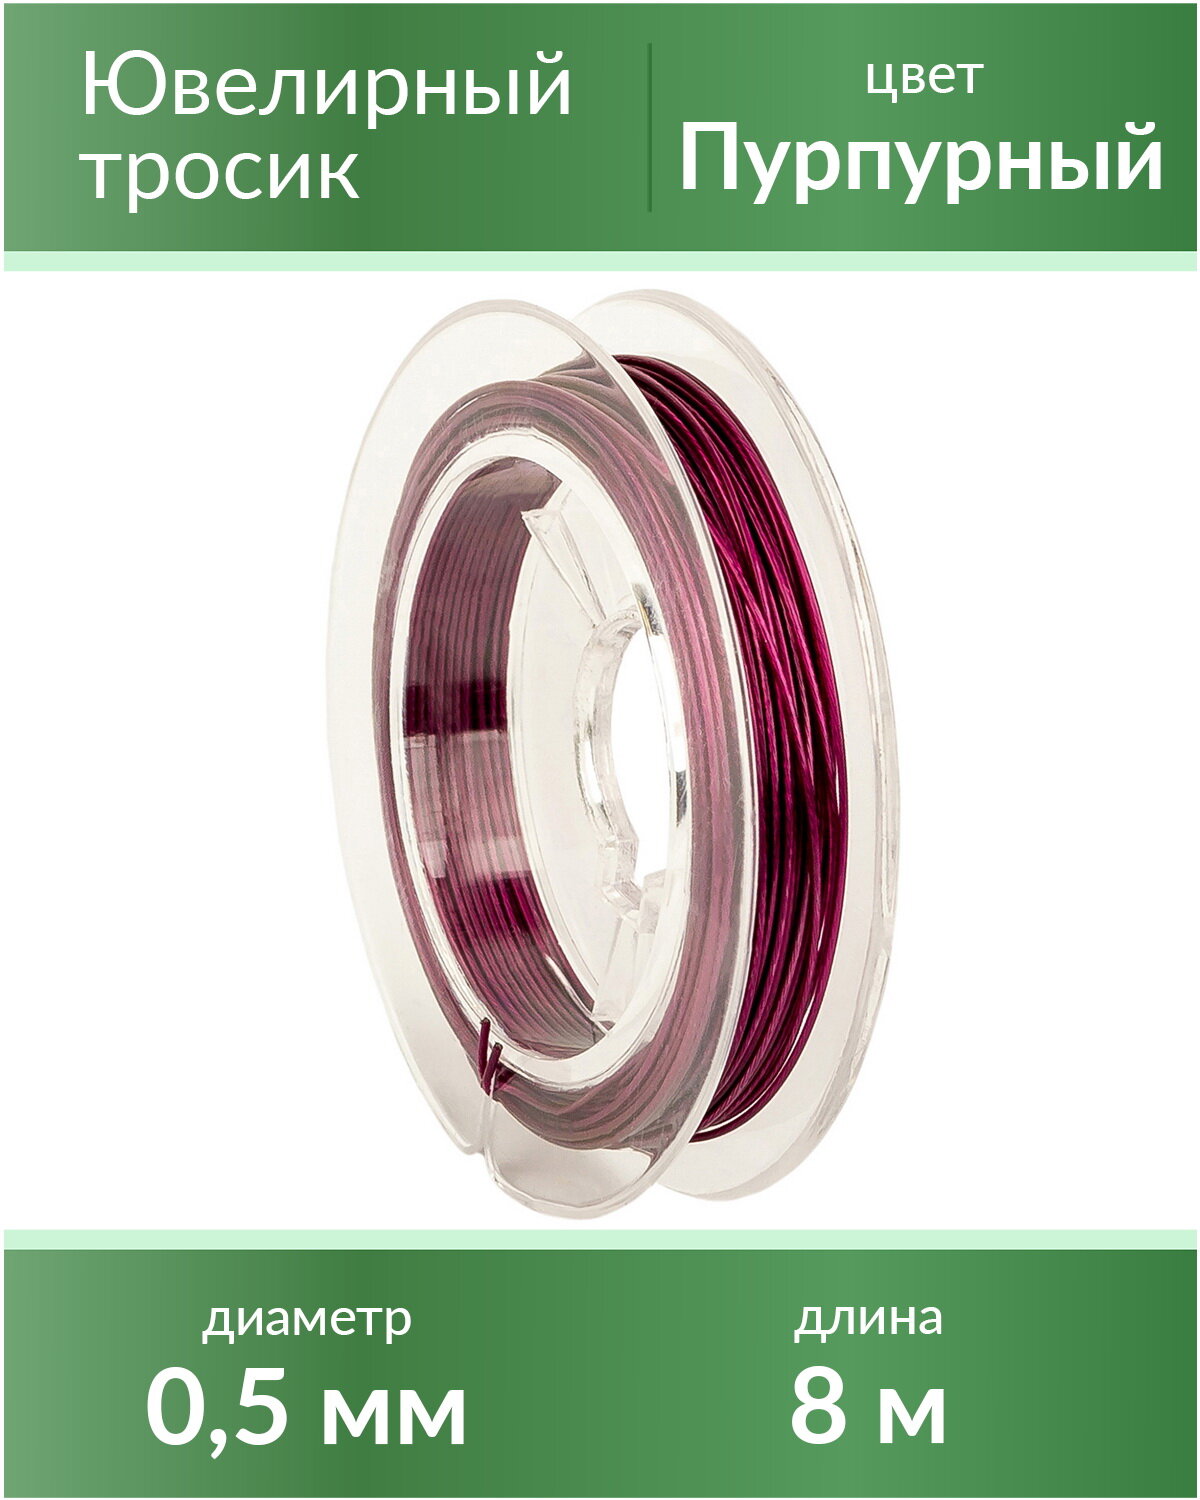 Тросик ювелирный (ланка), диаметр 0,5 мм, цвет: пурпурный